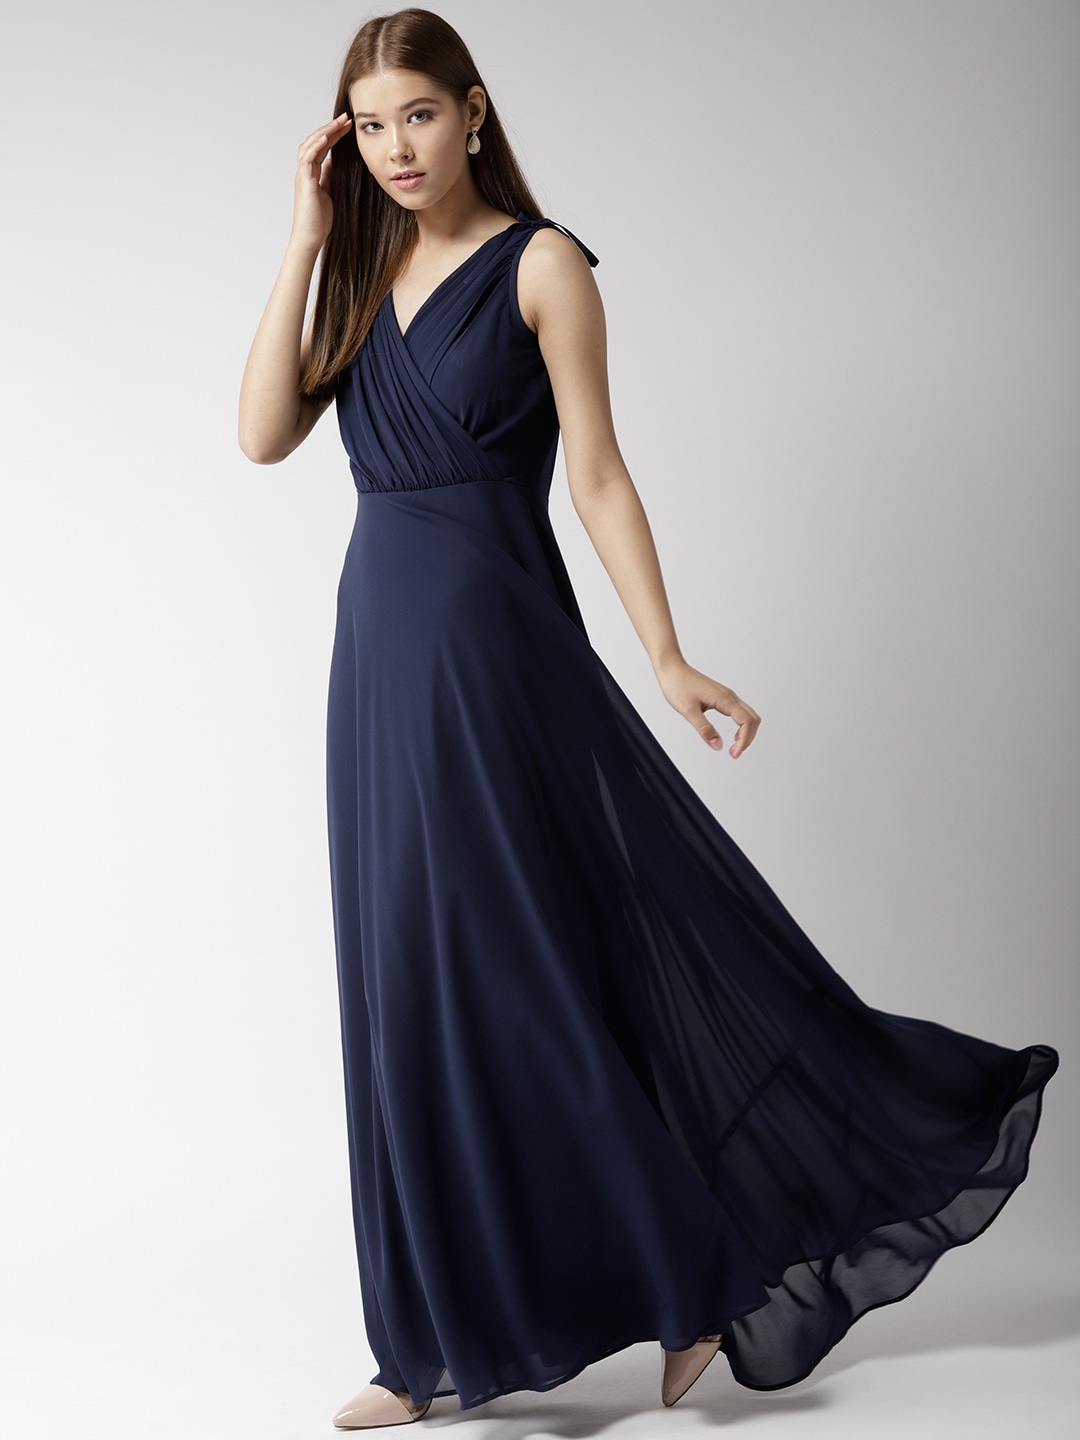 Blue floor length dress - Top 14 dresses from Myntra